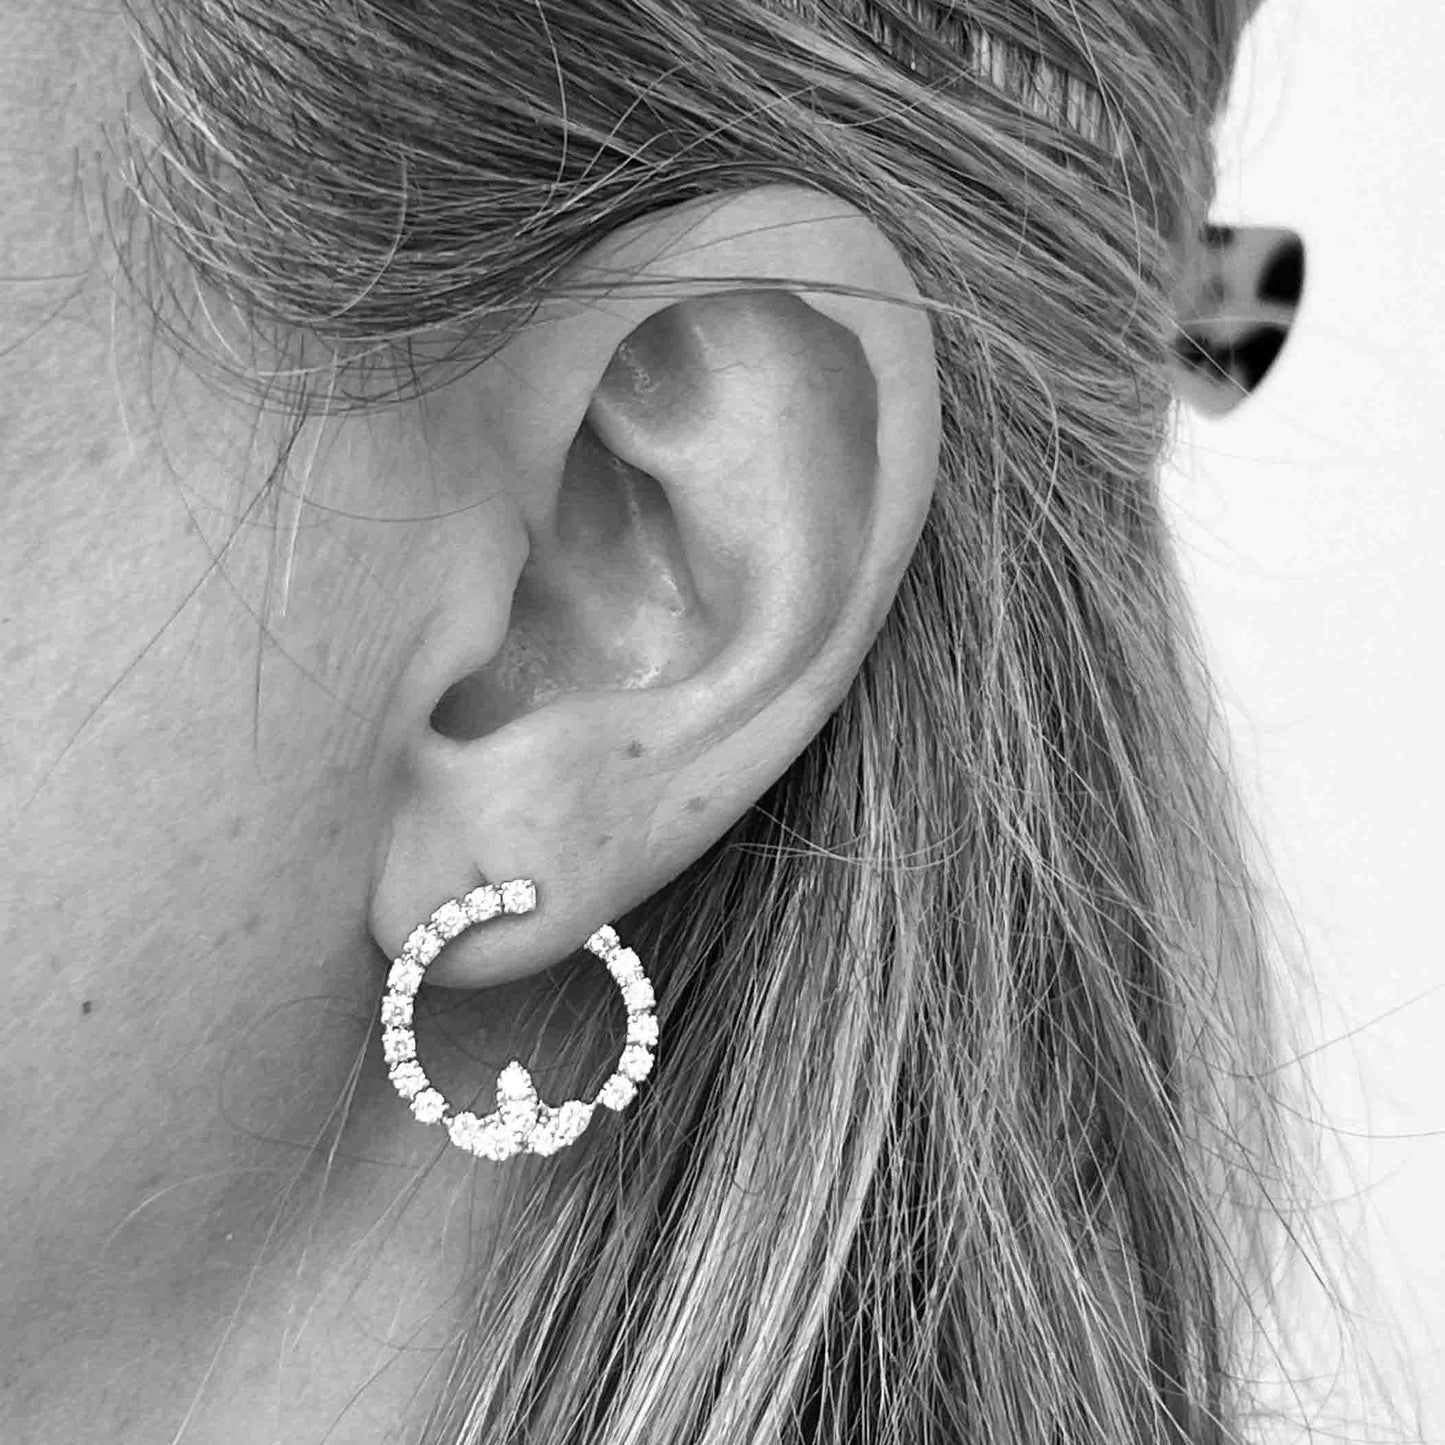 18kw Diamond Circle Earrings